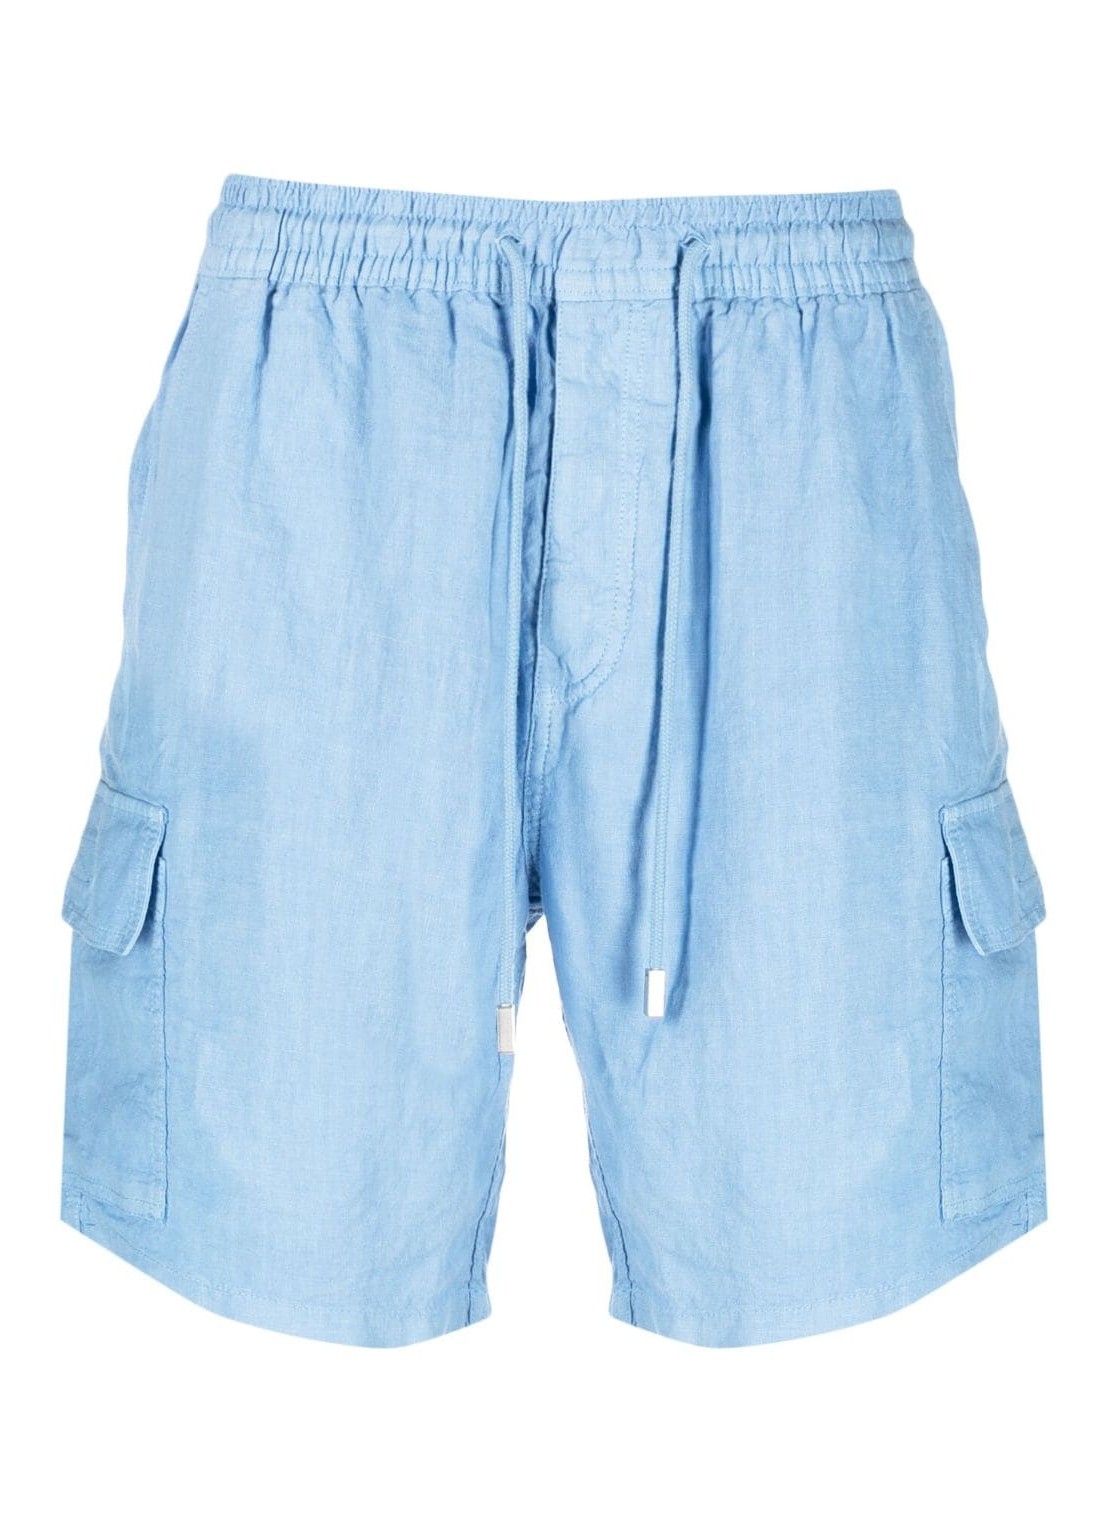 Pantalon corto vilebrequin short pant man baie u3u01 baiu3u01 368 talla Azul
 